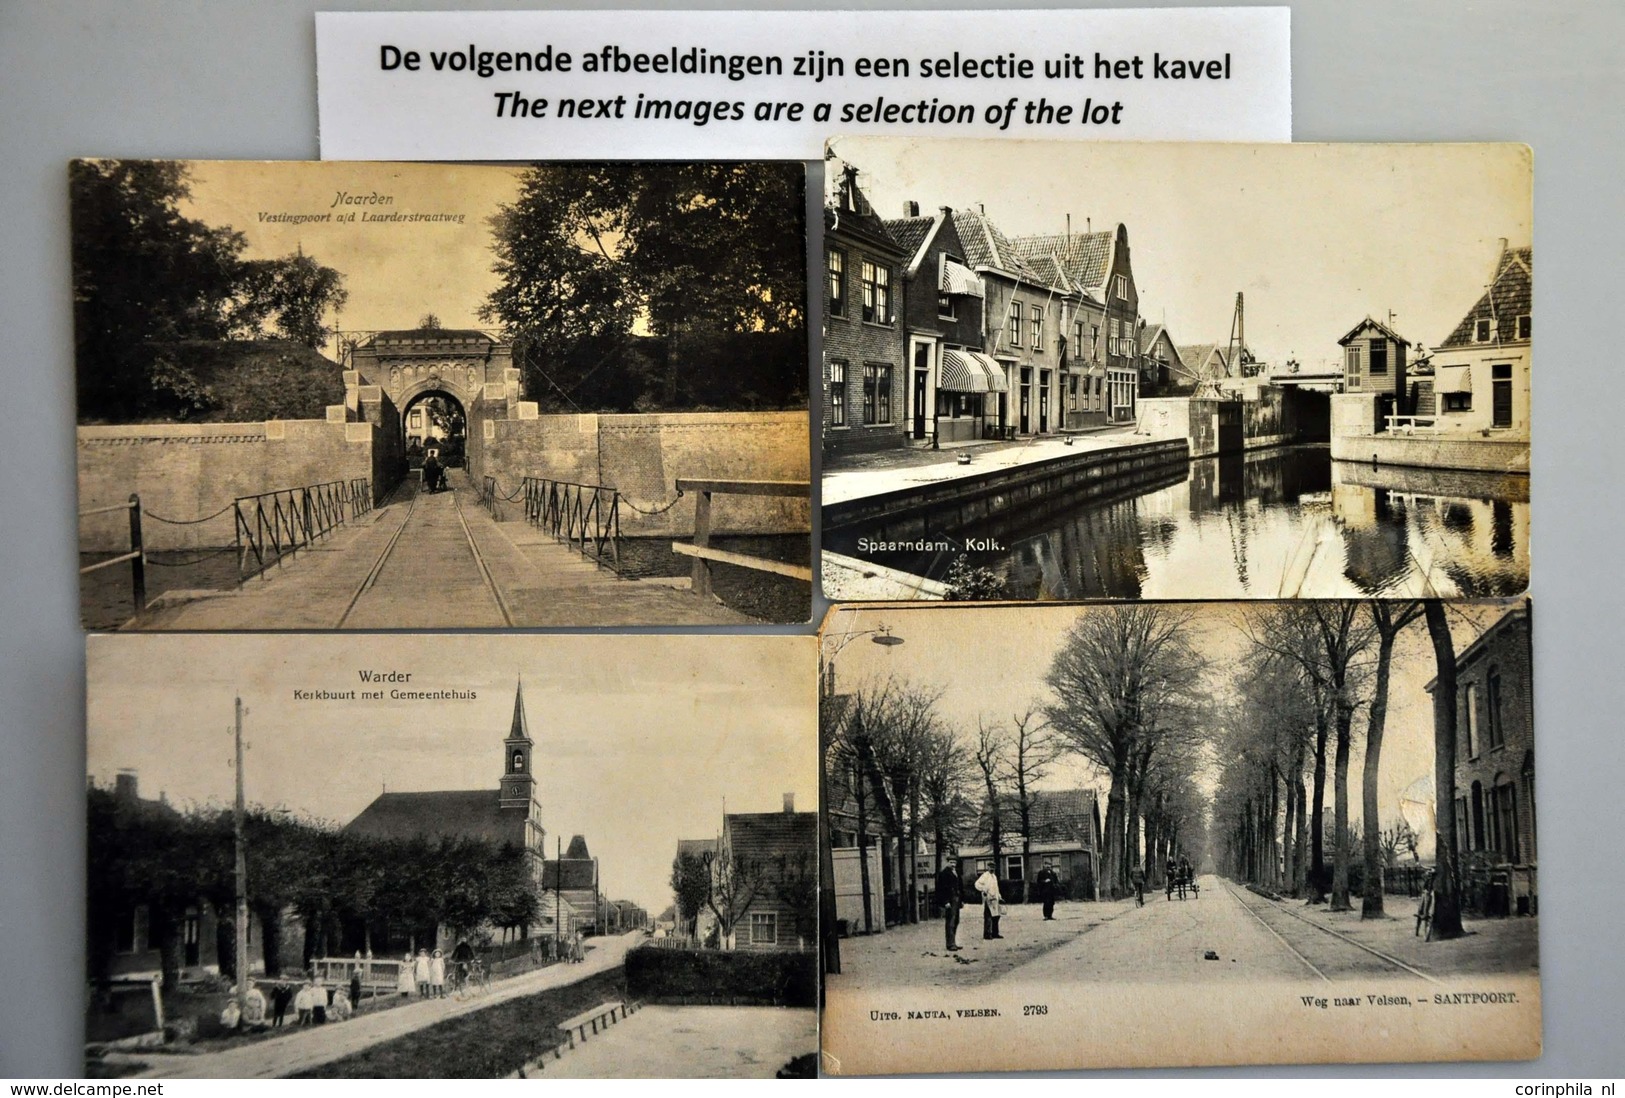 NL Noord-Holland - Non Classés